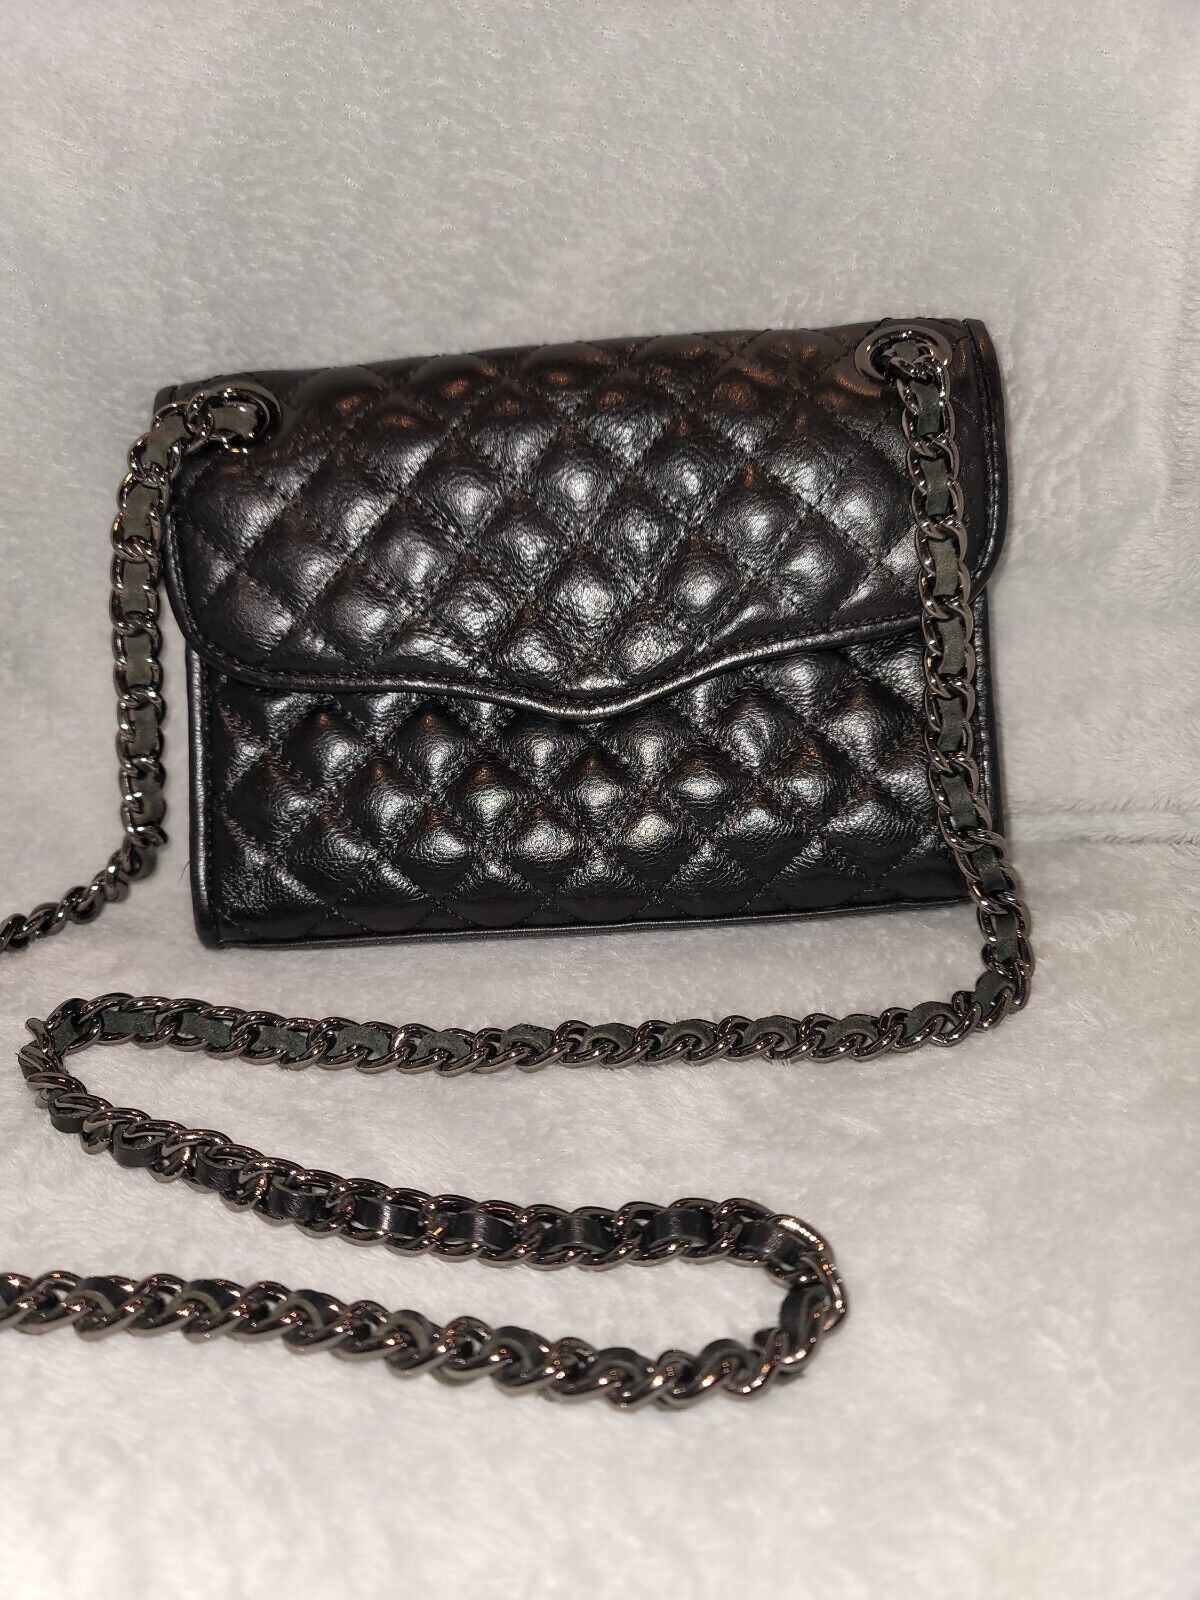 Rebecca Minkoff bag VG-EX - Hot Black! - Butterfly pattern | eBay